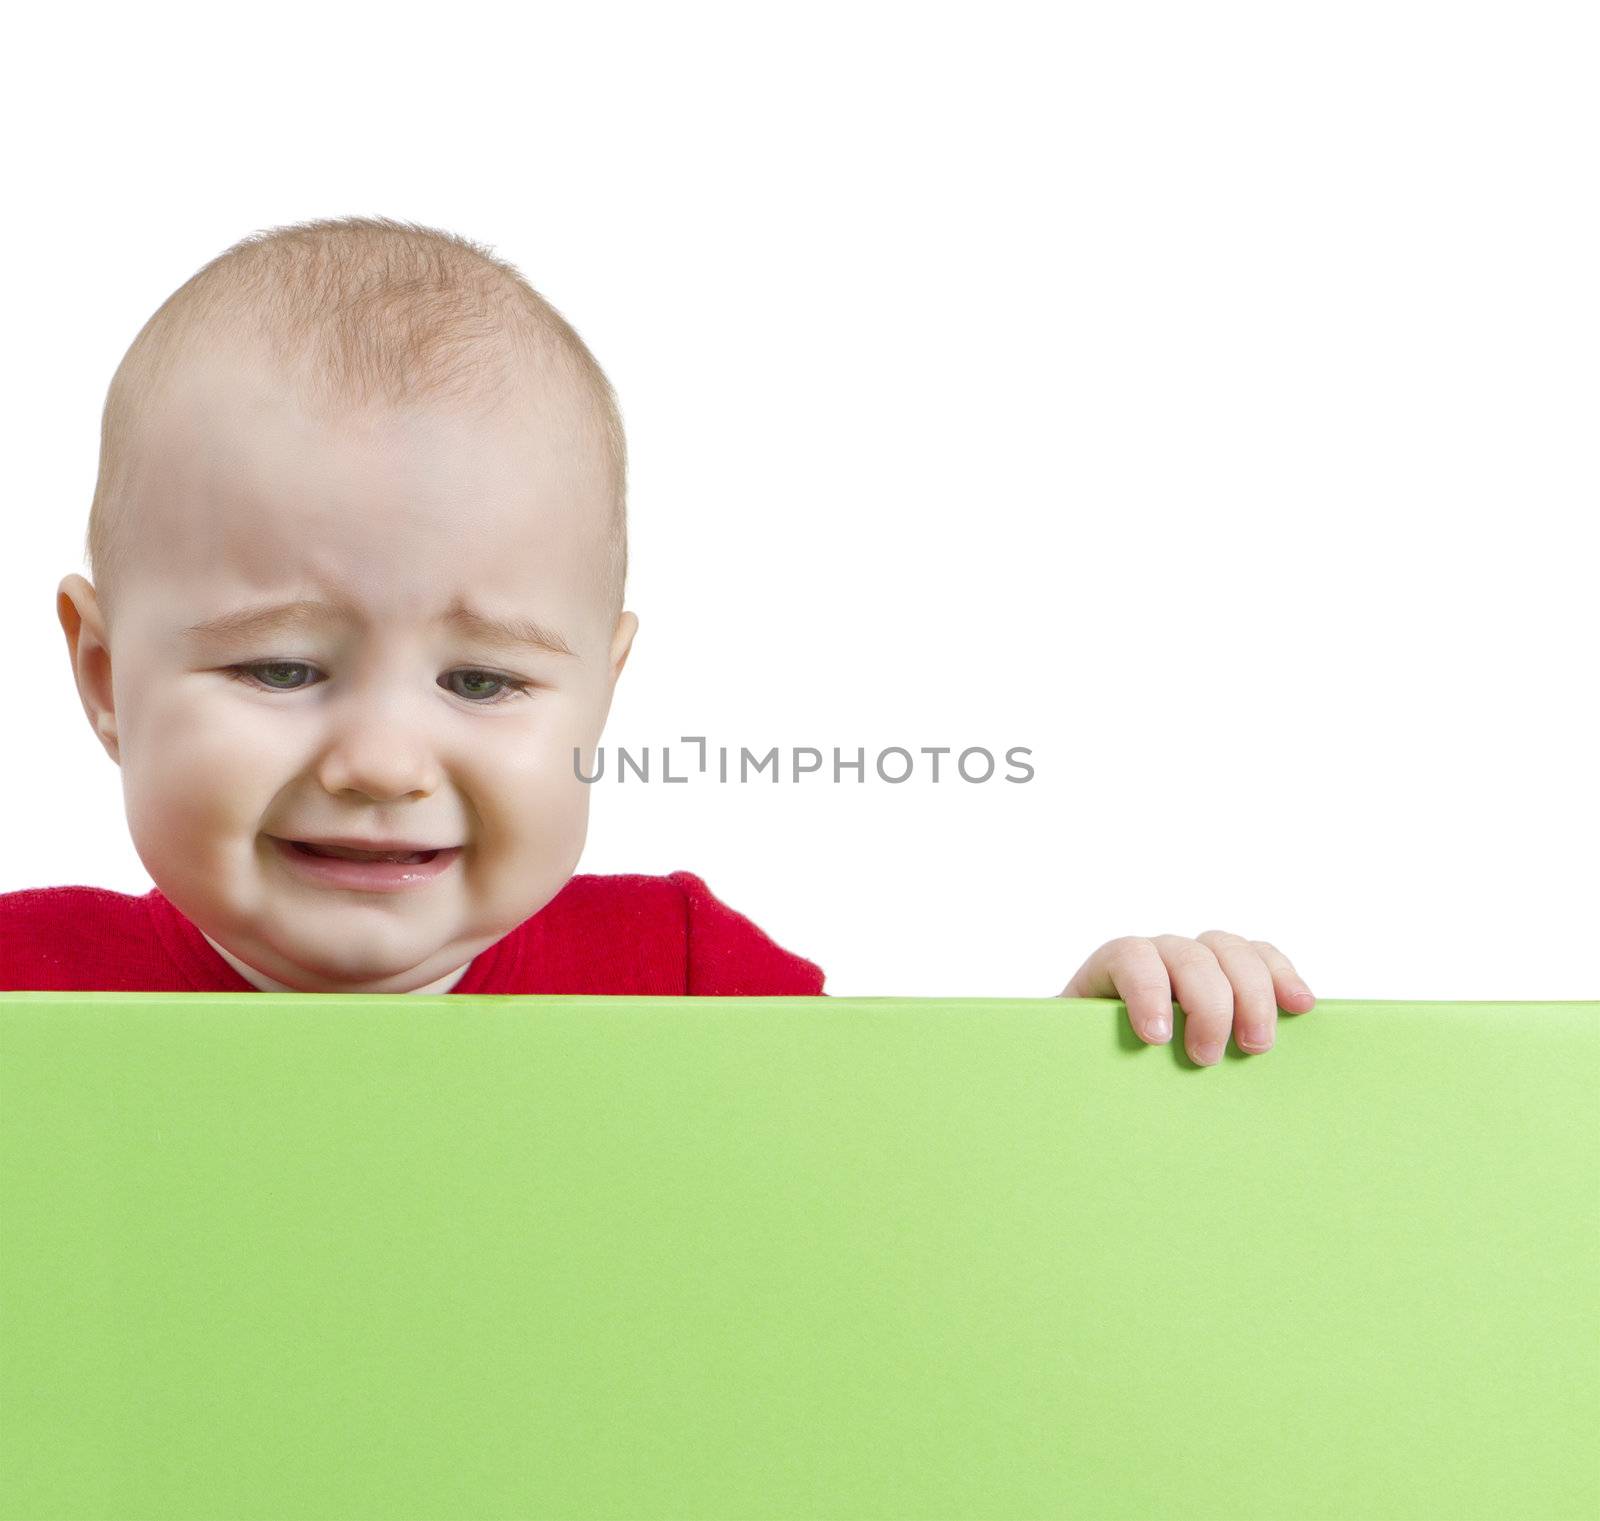 sad young child holding shield. isolate on white background